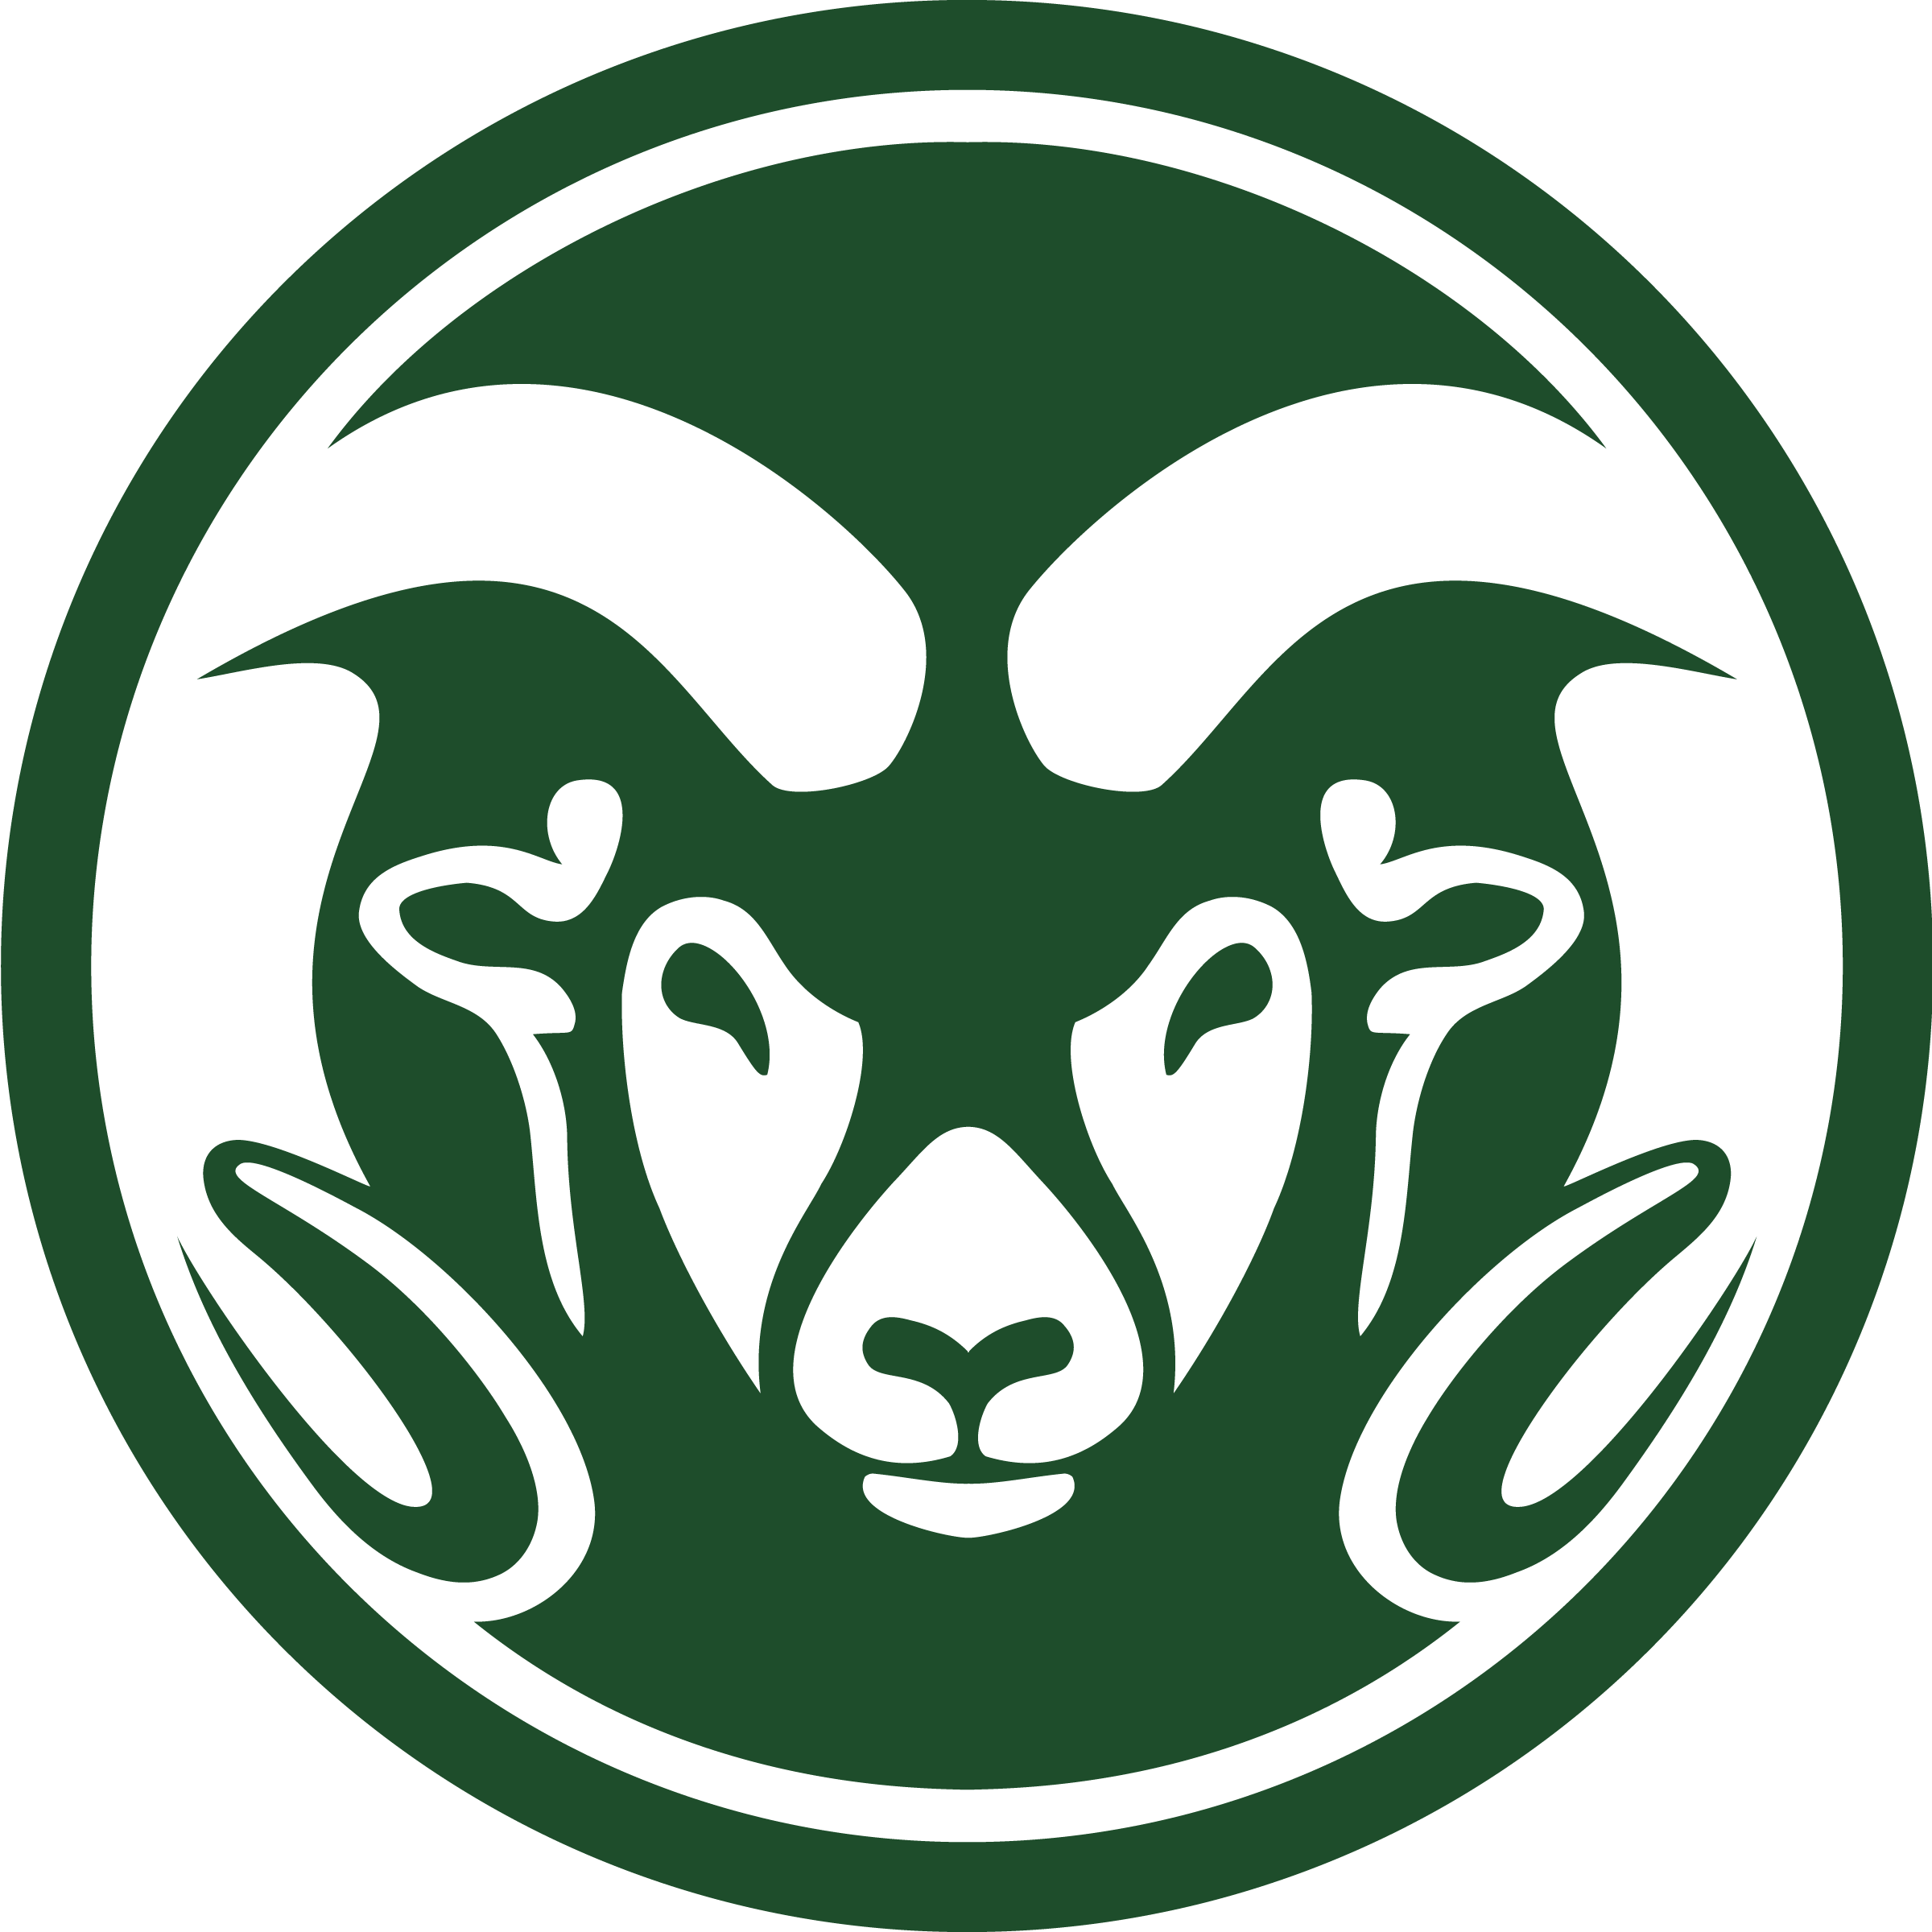 Csu-ram - Colorado State University Mascot (2400x2400)